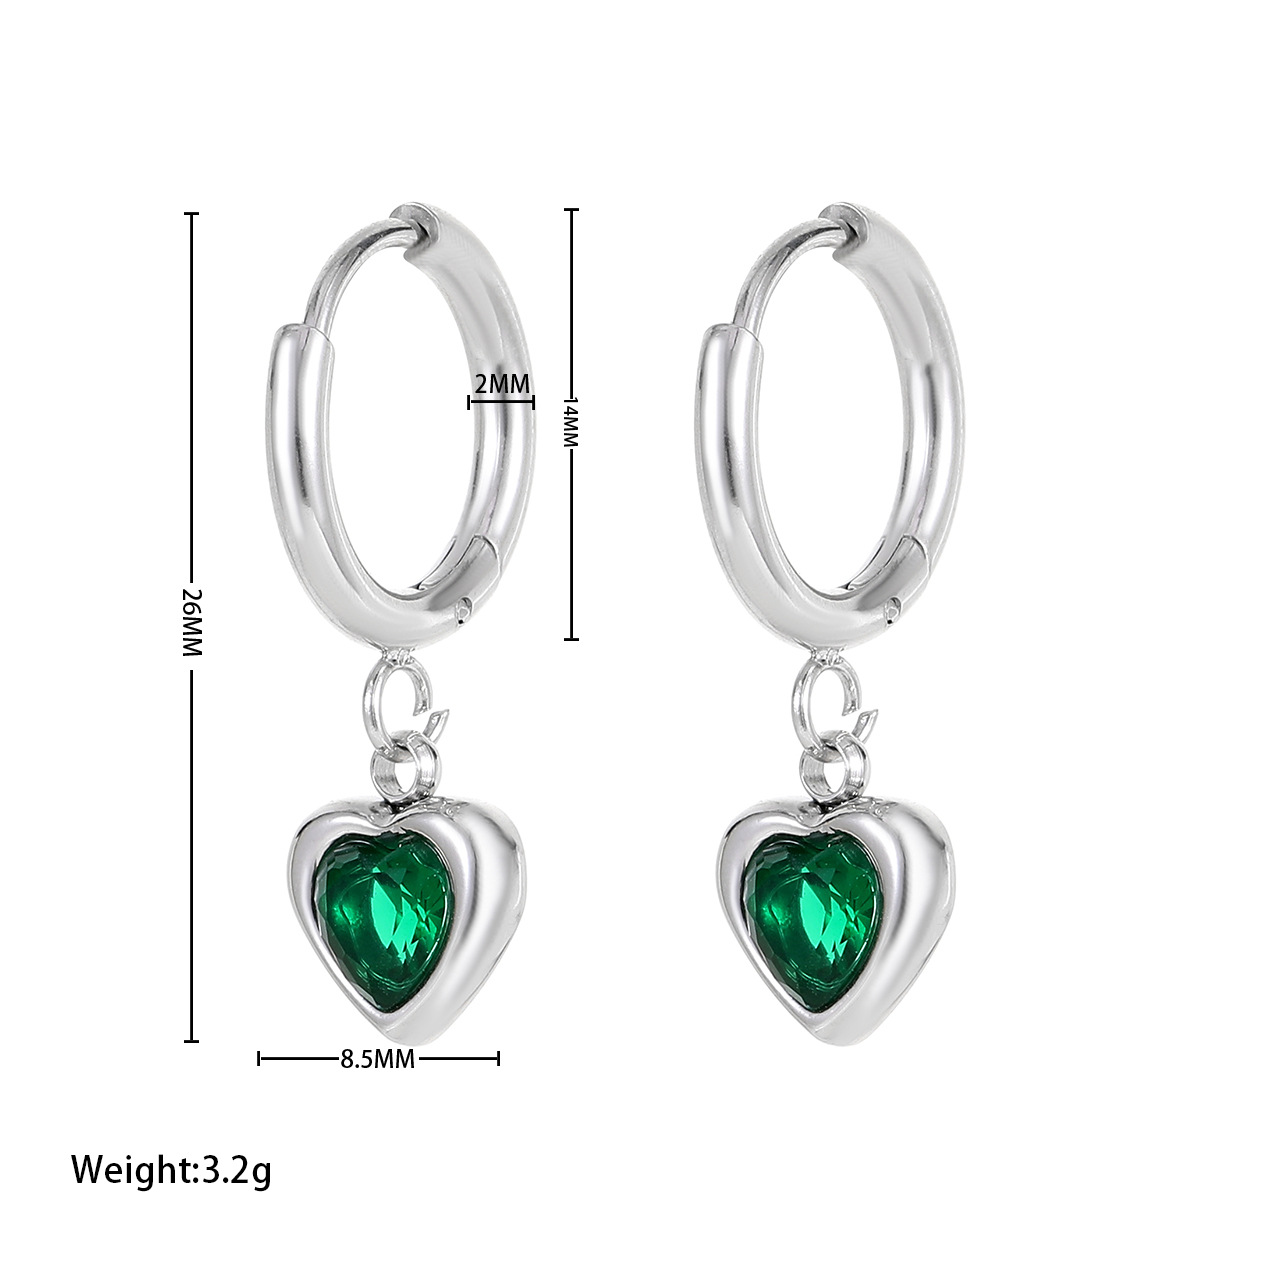 4:Earrings - Platinum colour green zircon